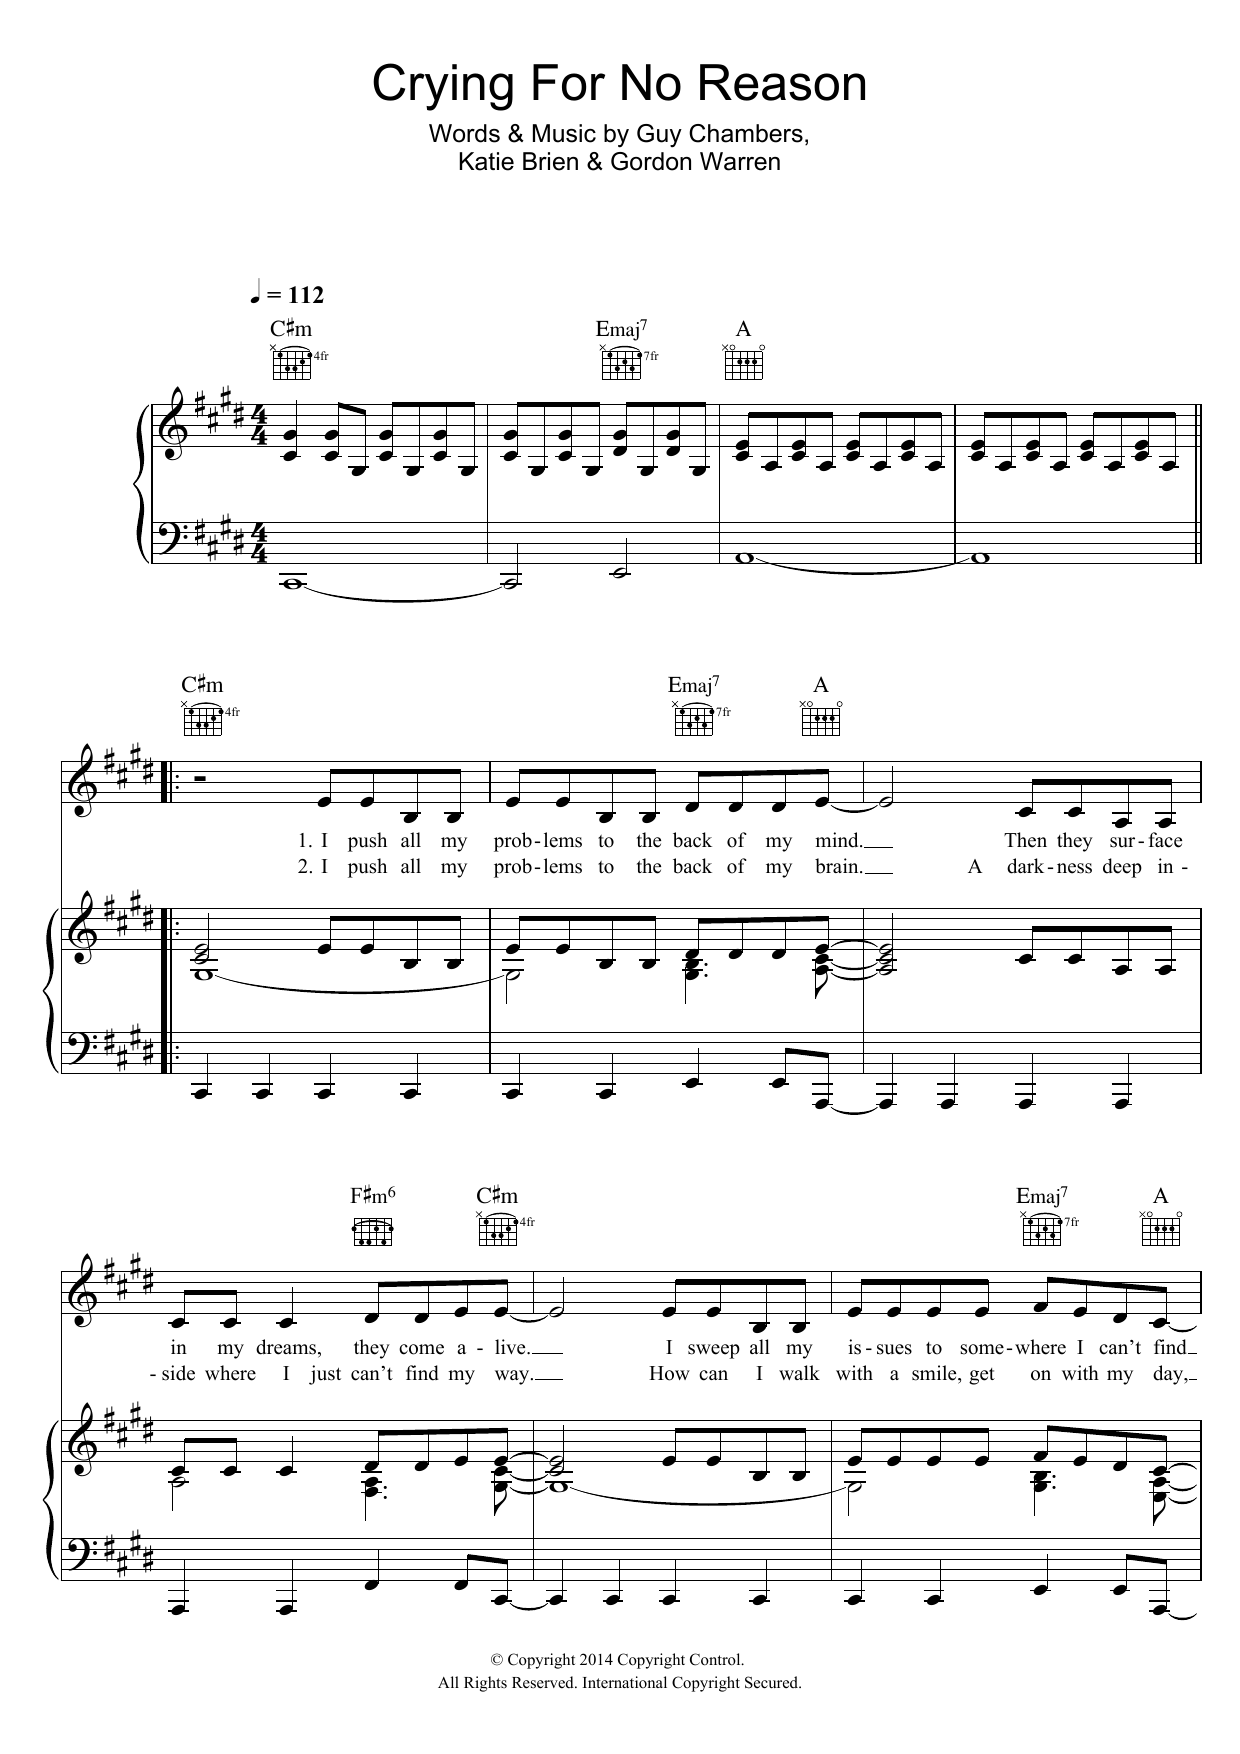 Katy B Crying For No Reason Sheet Music Notes & Chords for Piano, Vocal & Guitar - Download or Print PDF